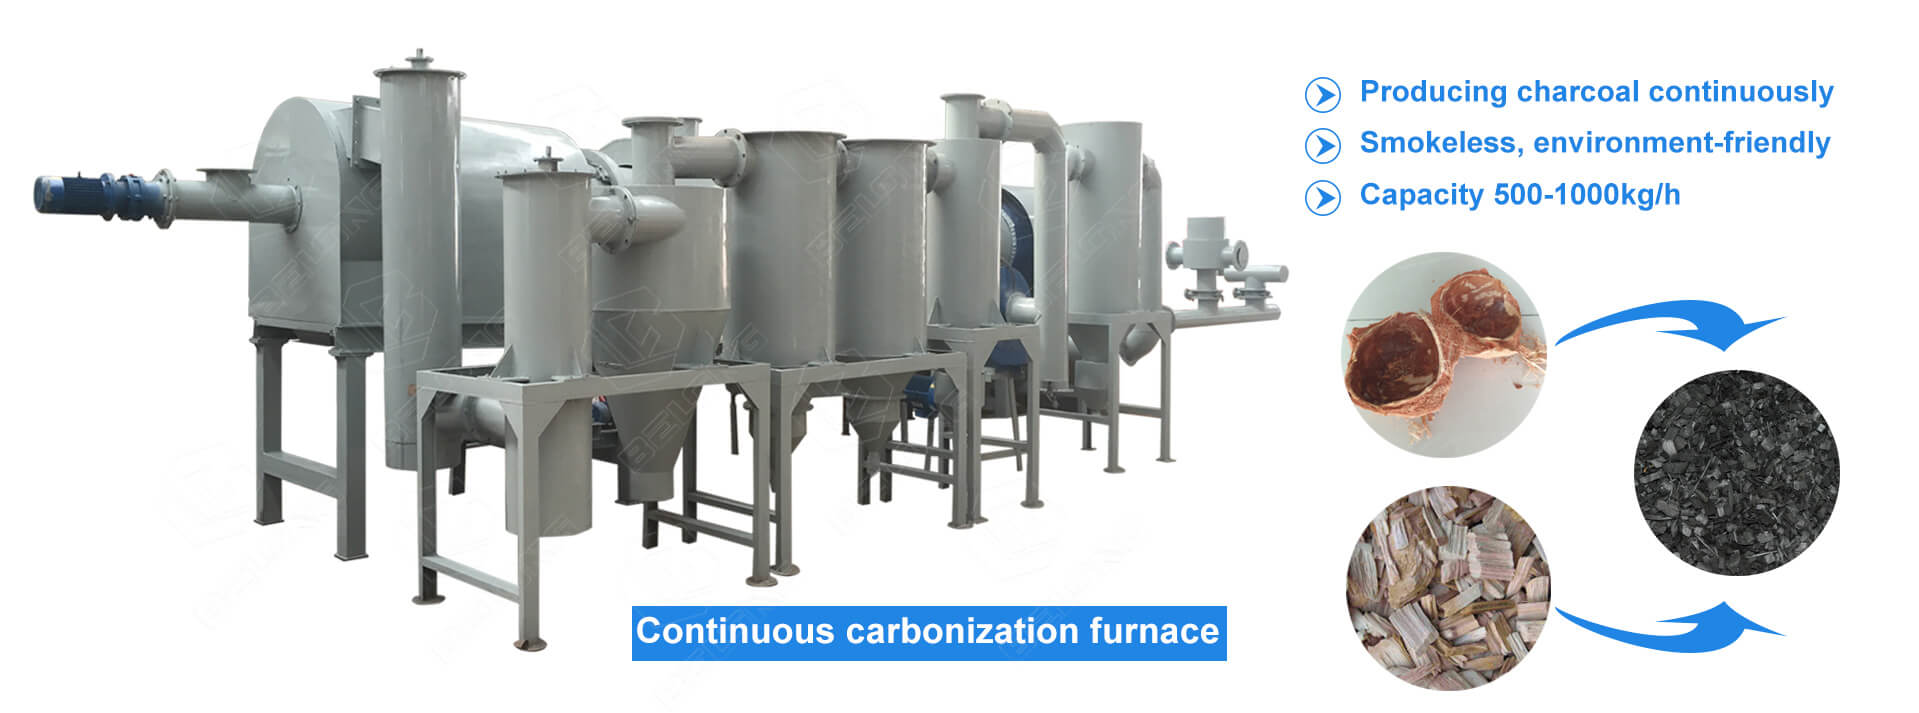 Continuous carbonization furnace